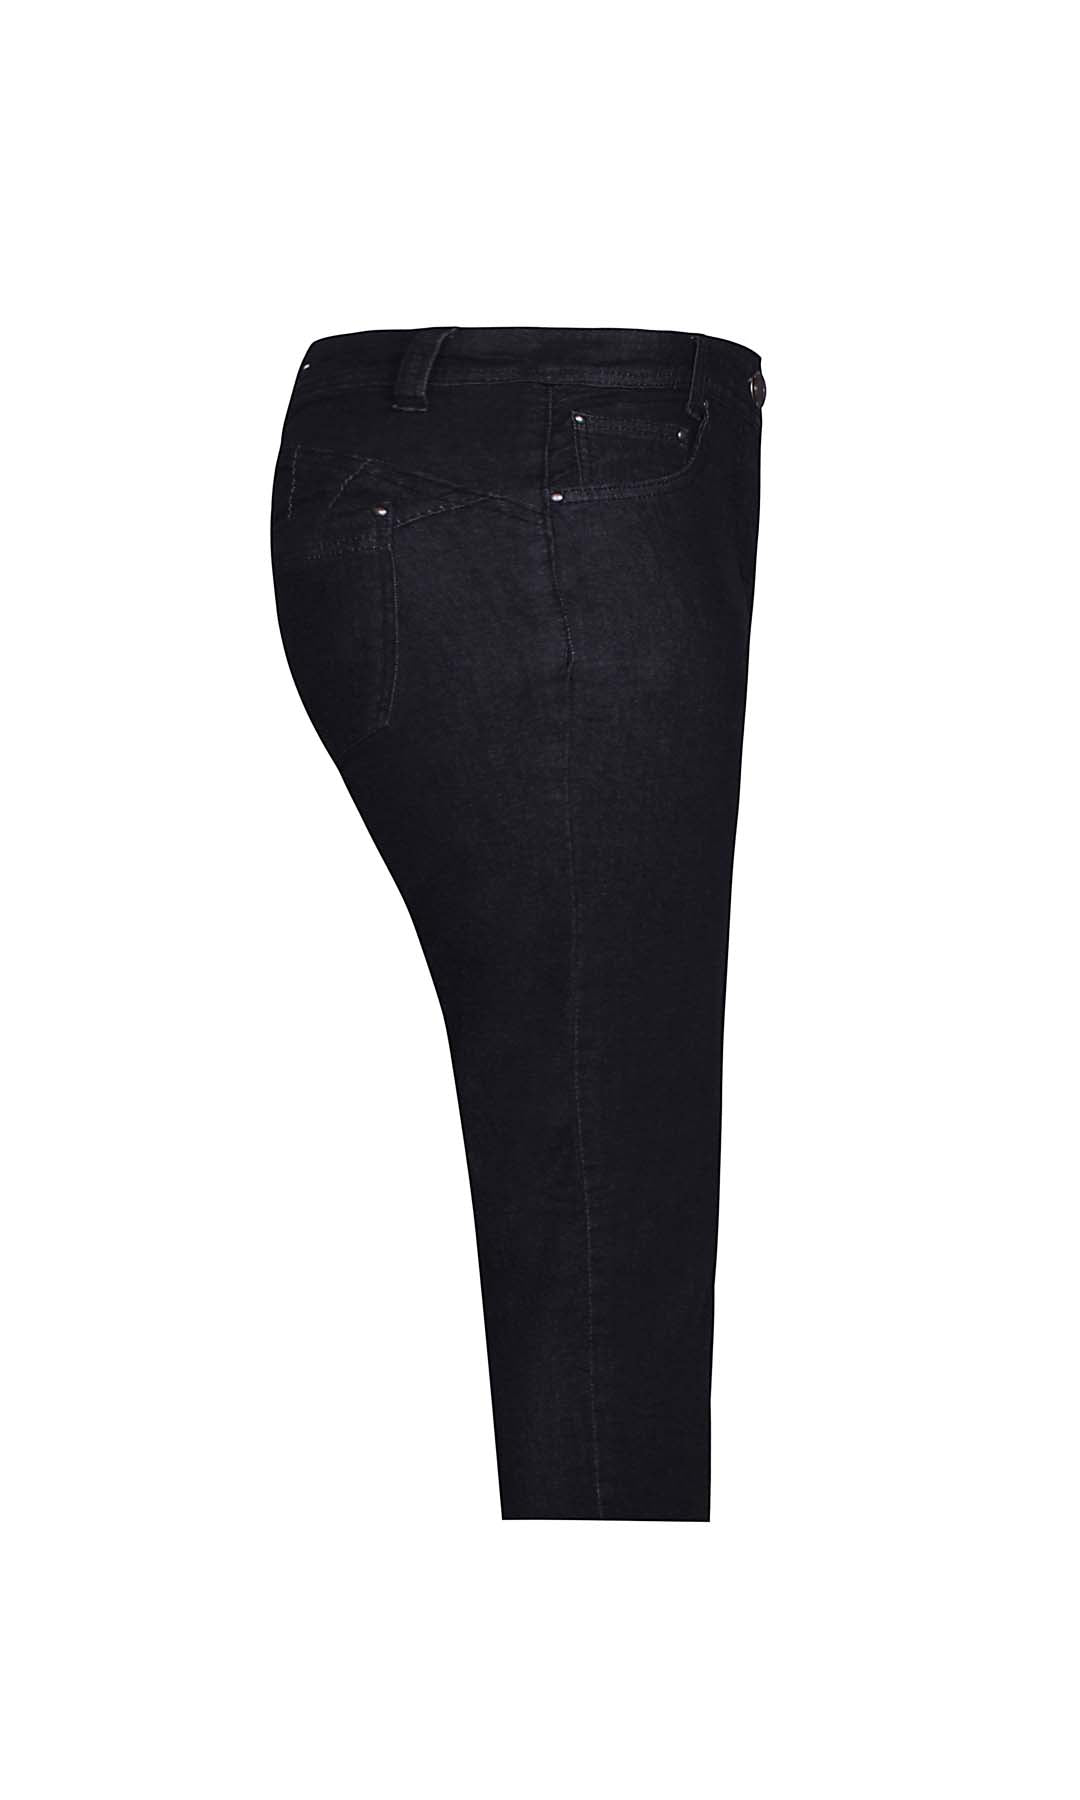 Shape 1 20 - Pants - Black